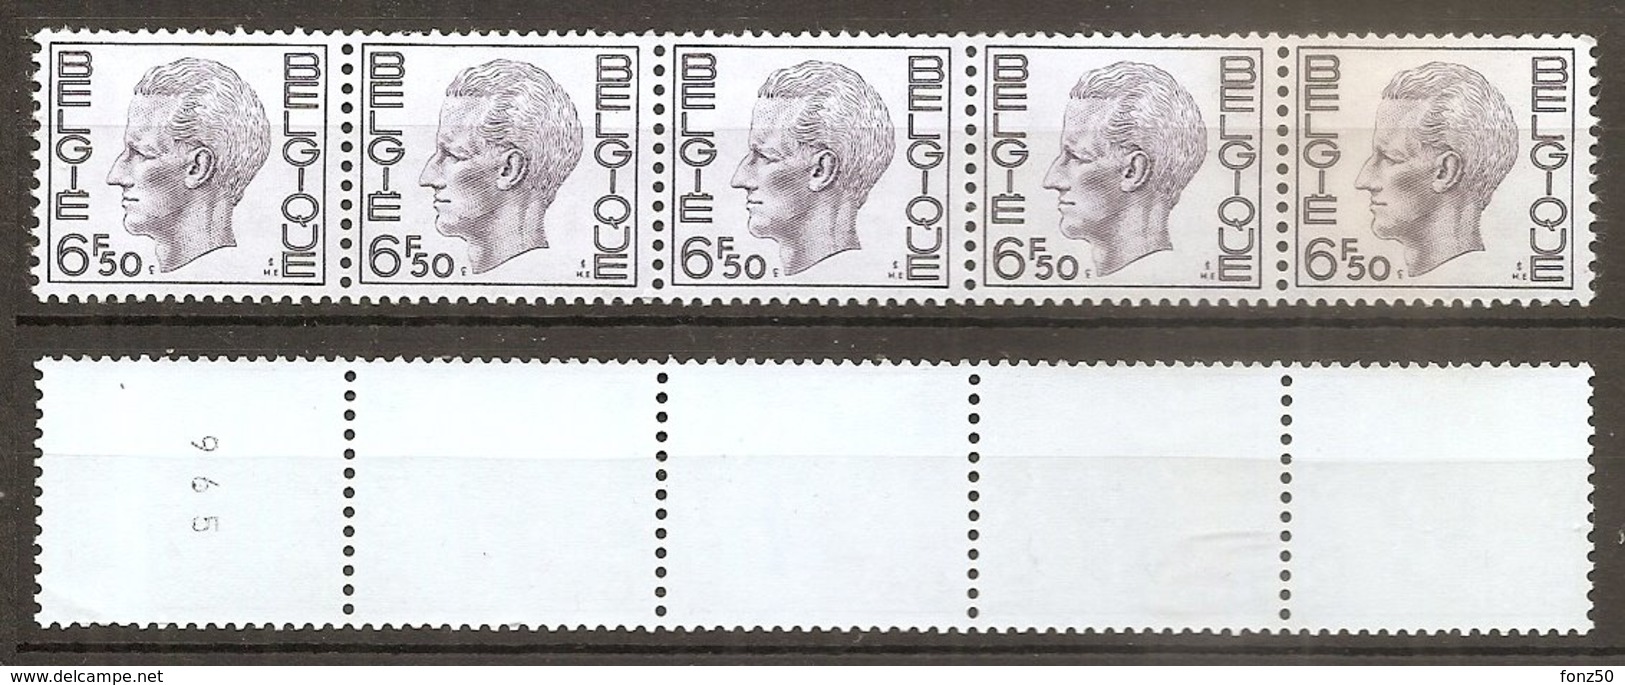 BELGIE * Nr R 54 * ROLZEGEL * Postfris Xx * FLUOR PAPIER - Coil Stamps